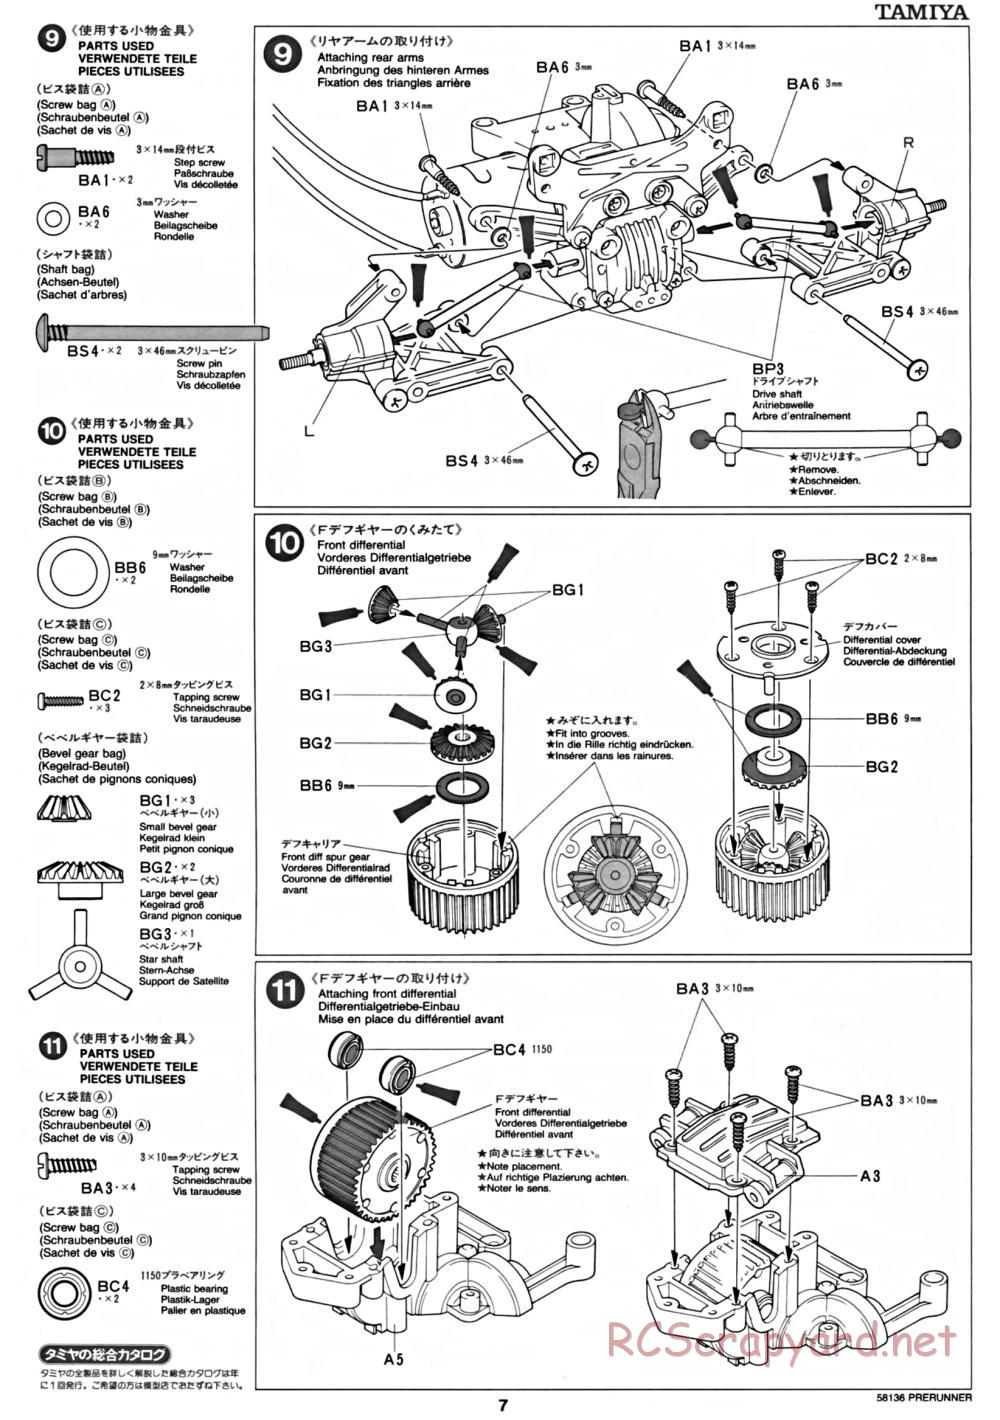 Tamiya - Toyota Prerunner Chassis - Manual - Page 7